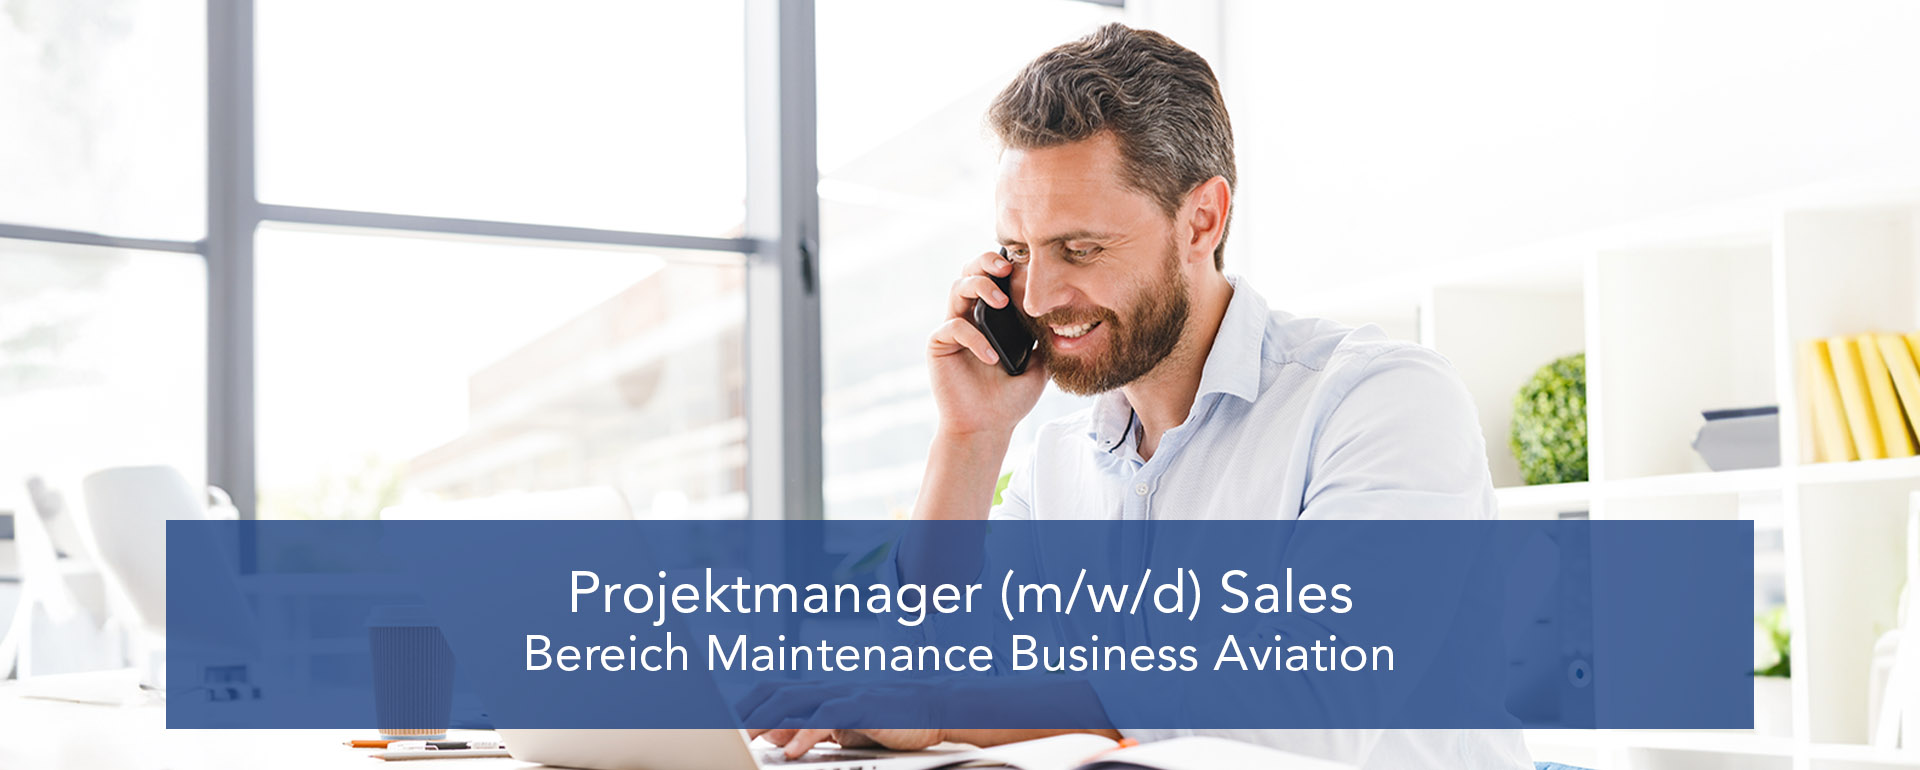 Projektmanager Sales (m/w/d) Bereich Maintenance Business Aviation